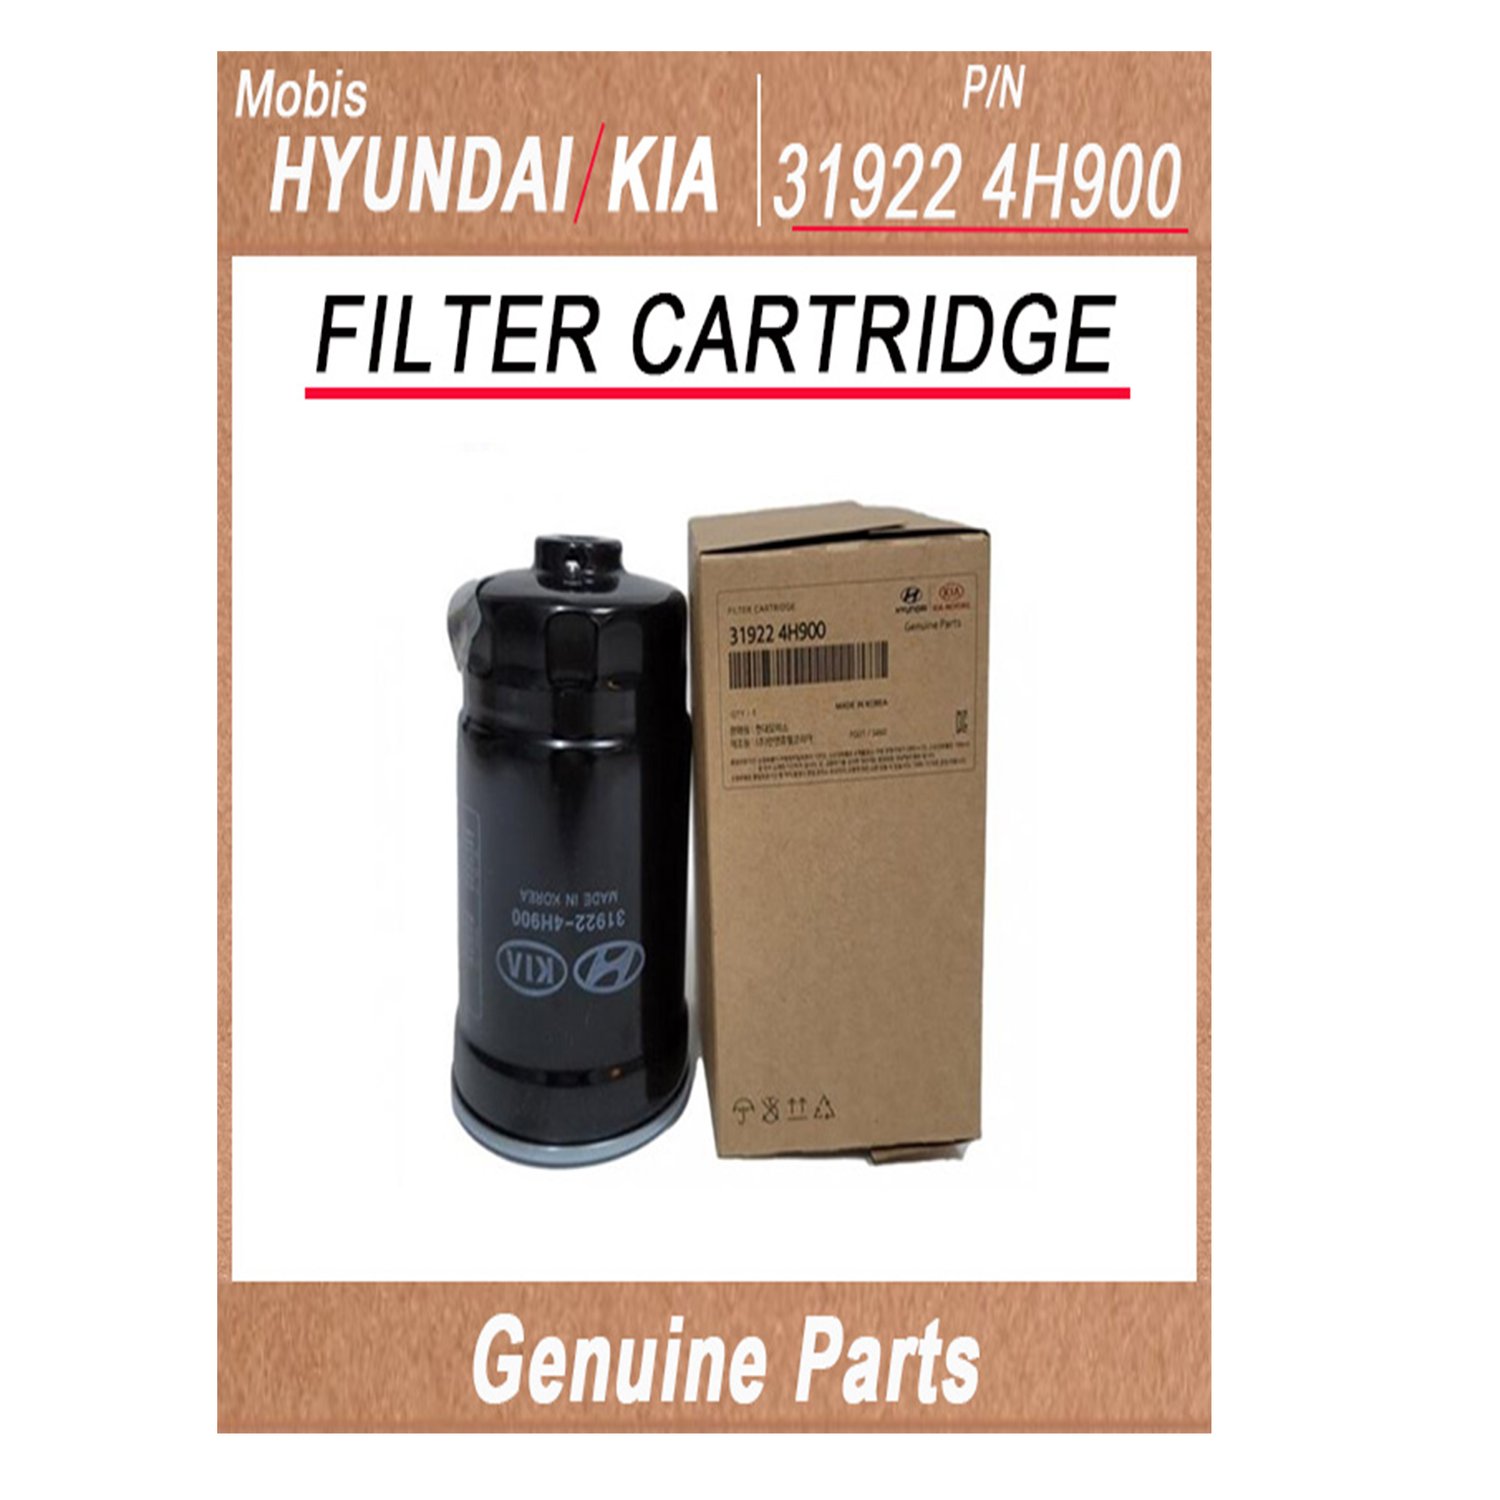 319224H900 _ FILTER CARTRIDGE _ Genuine Korean Automotive Spare Parts _ Hyundai Kia _Mobis_